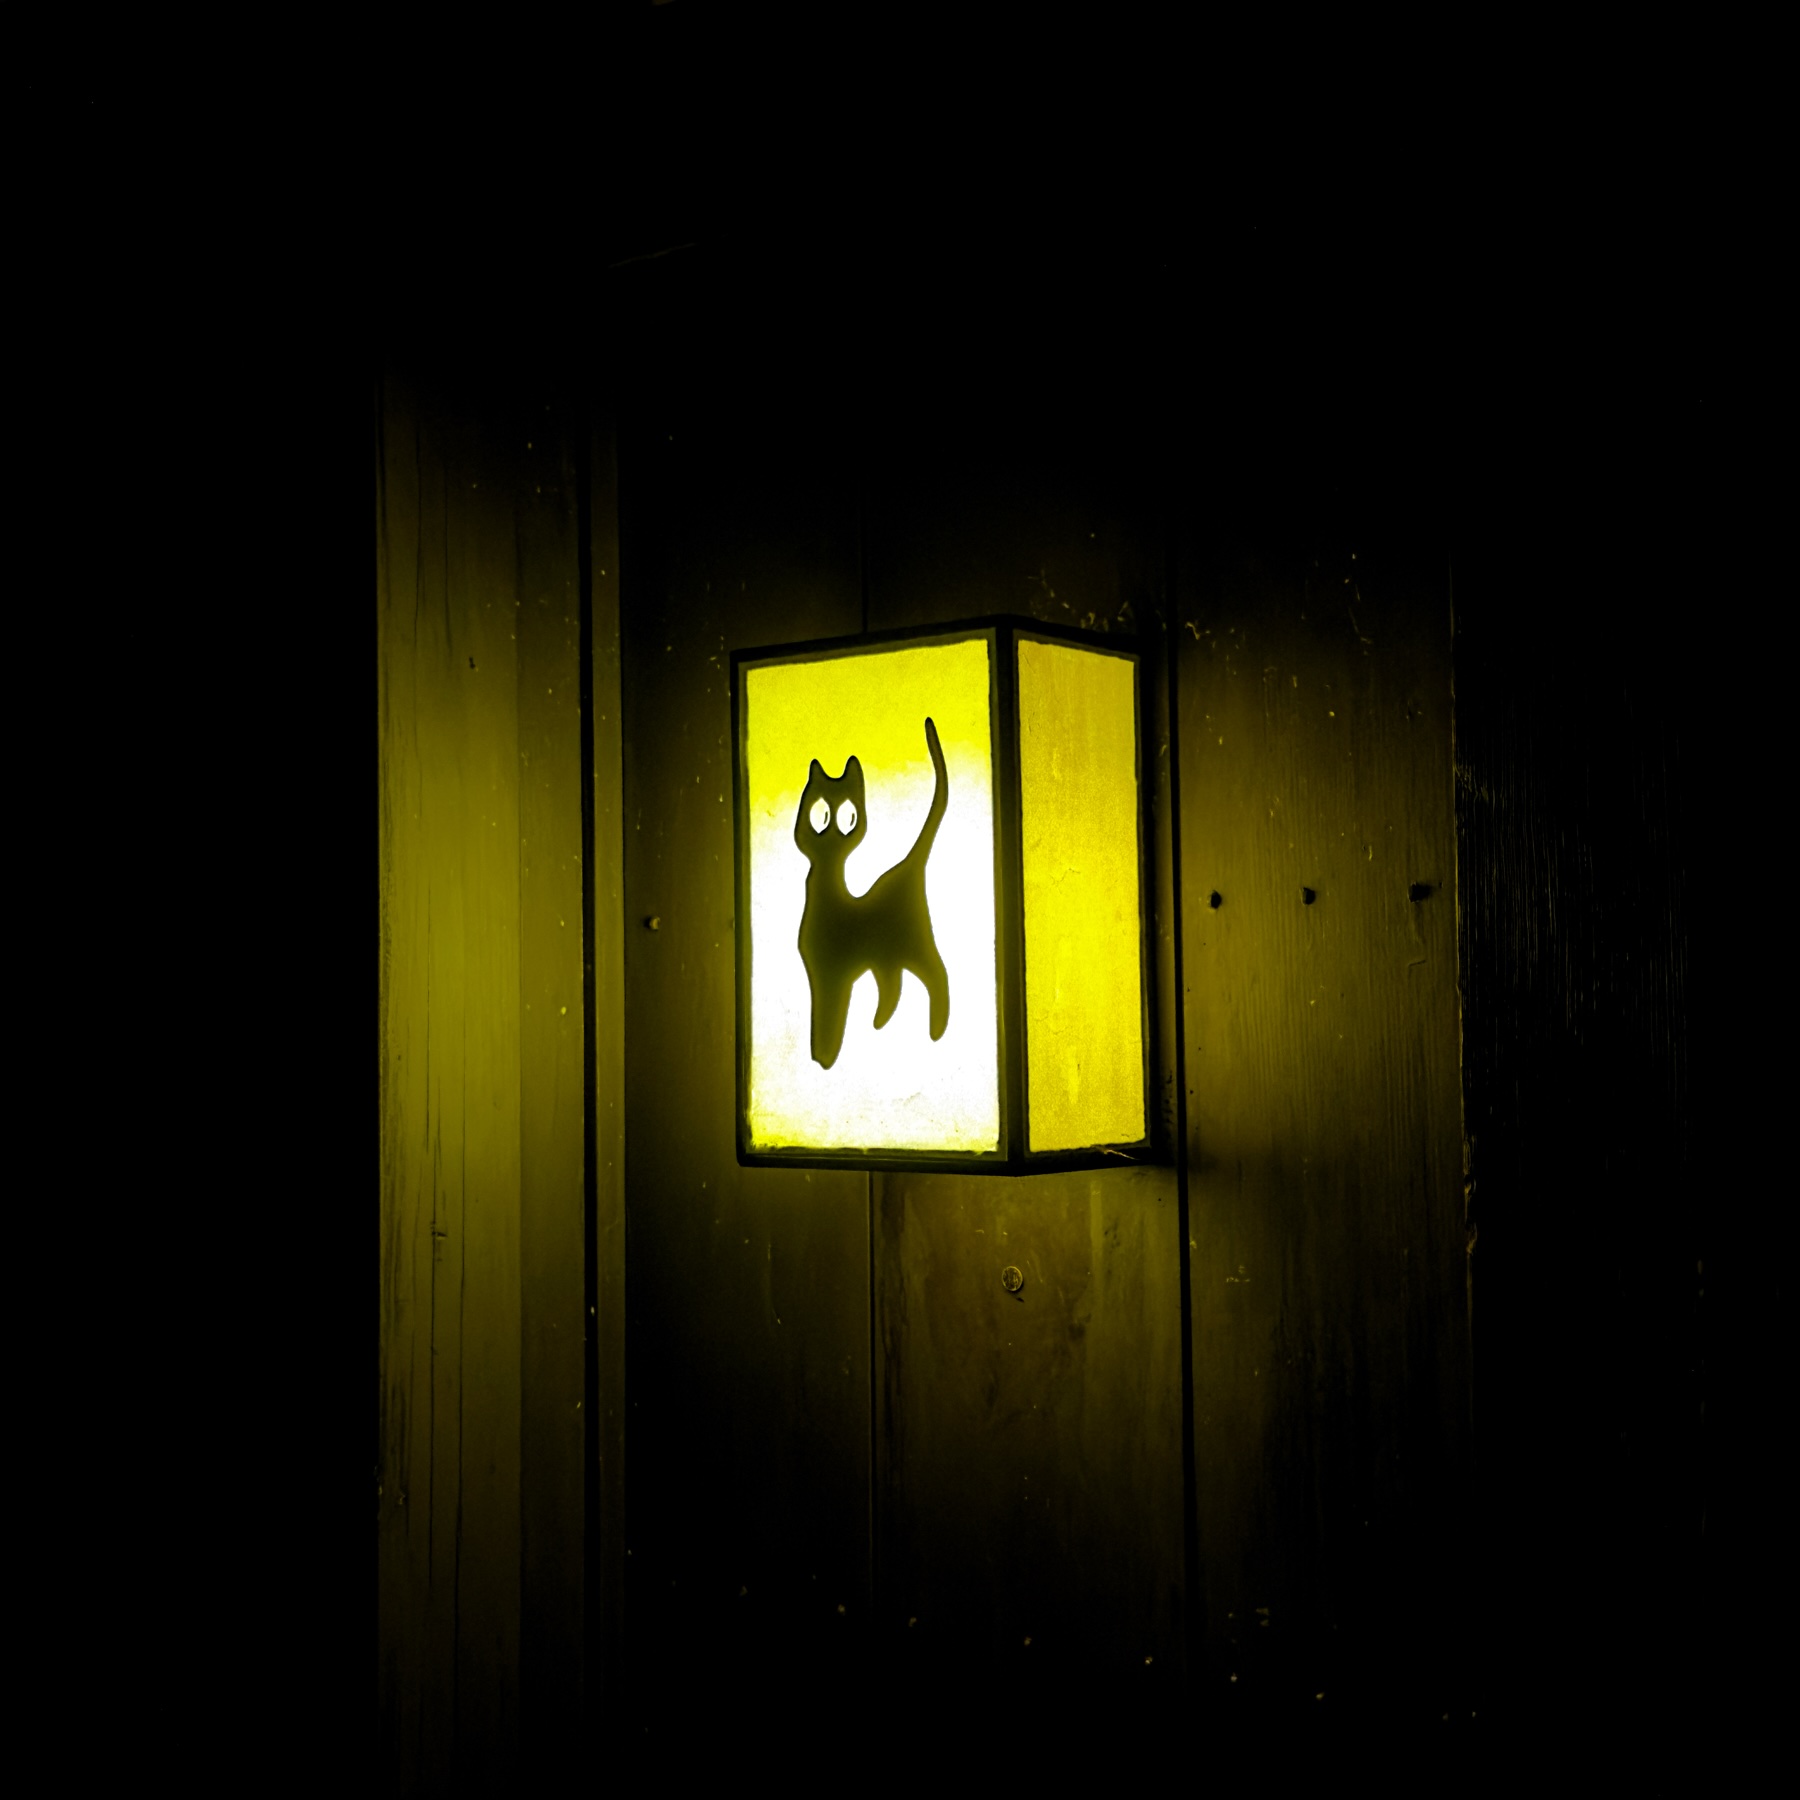 A cat portrayed on a lantern